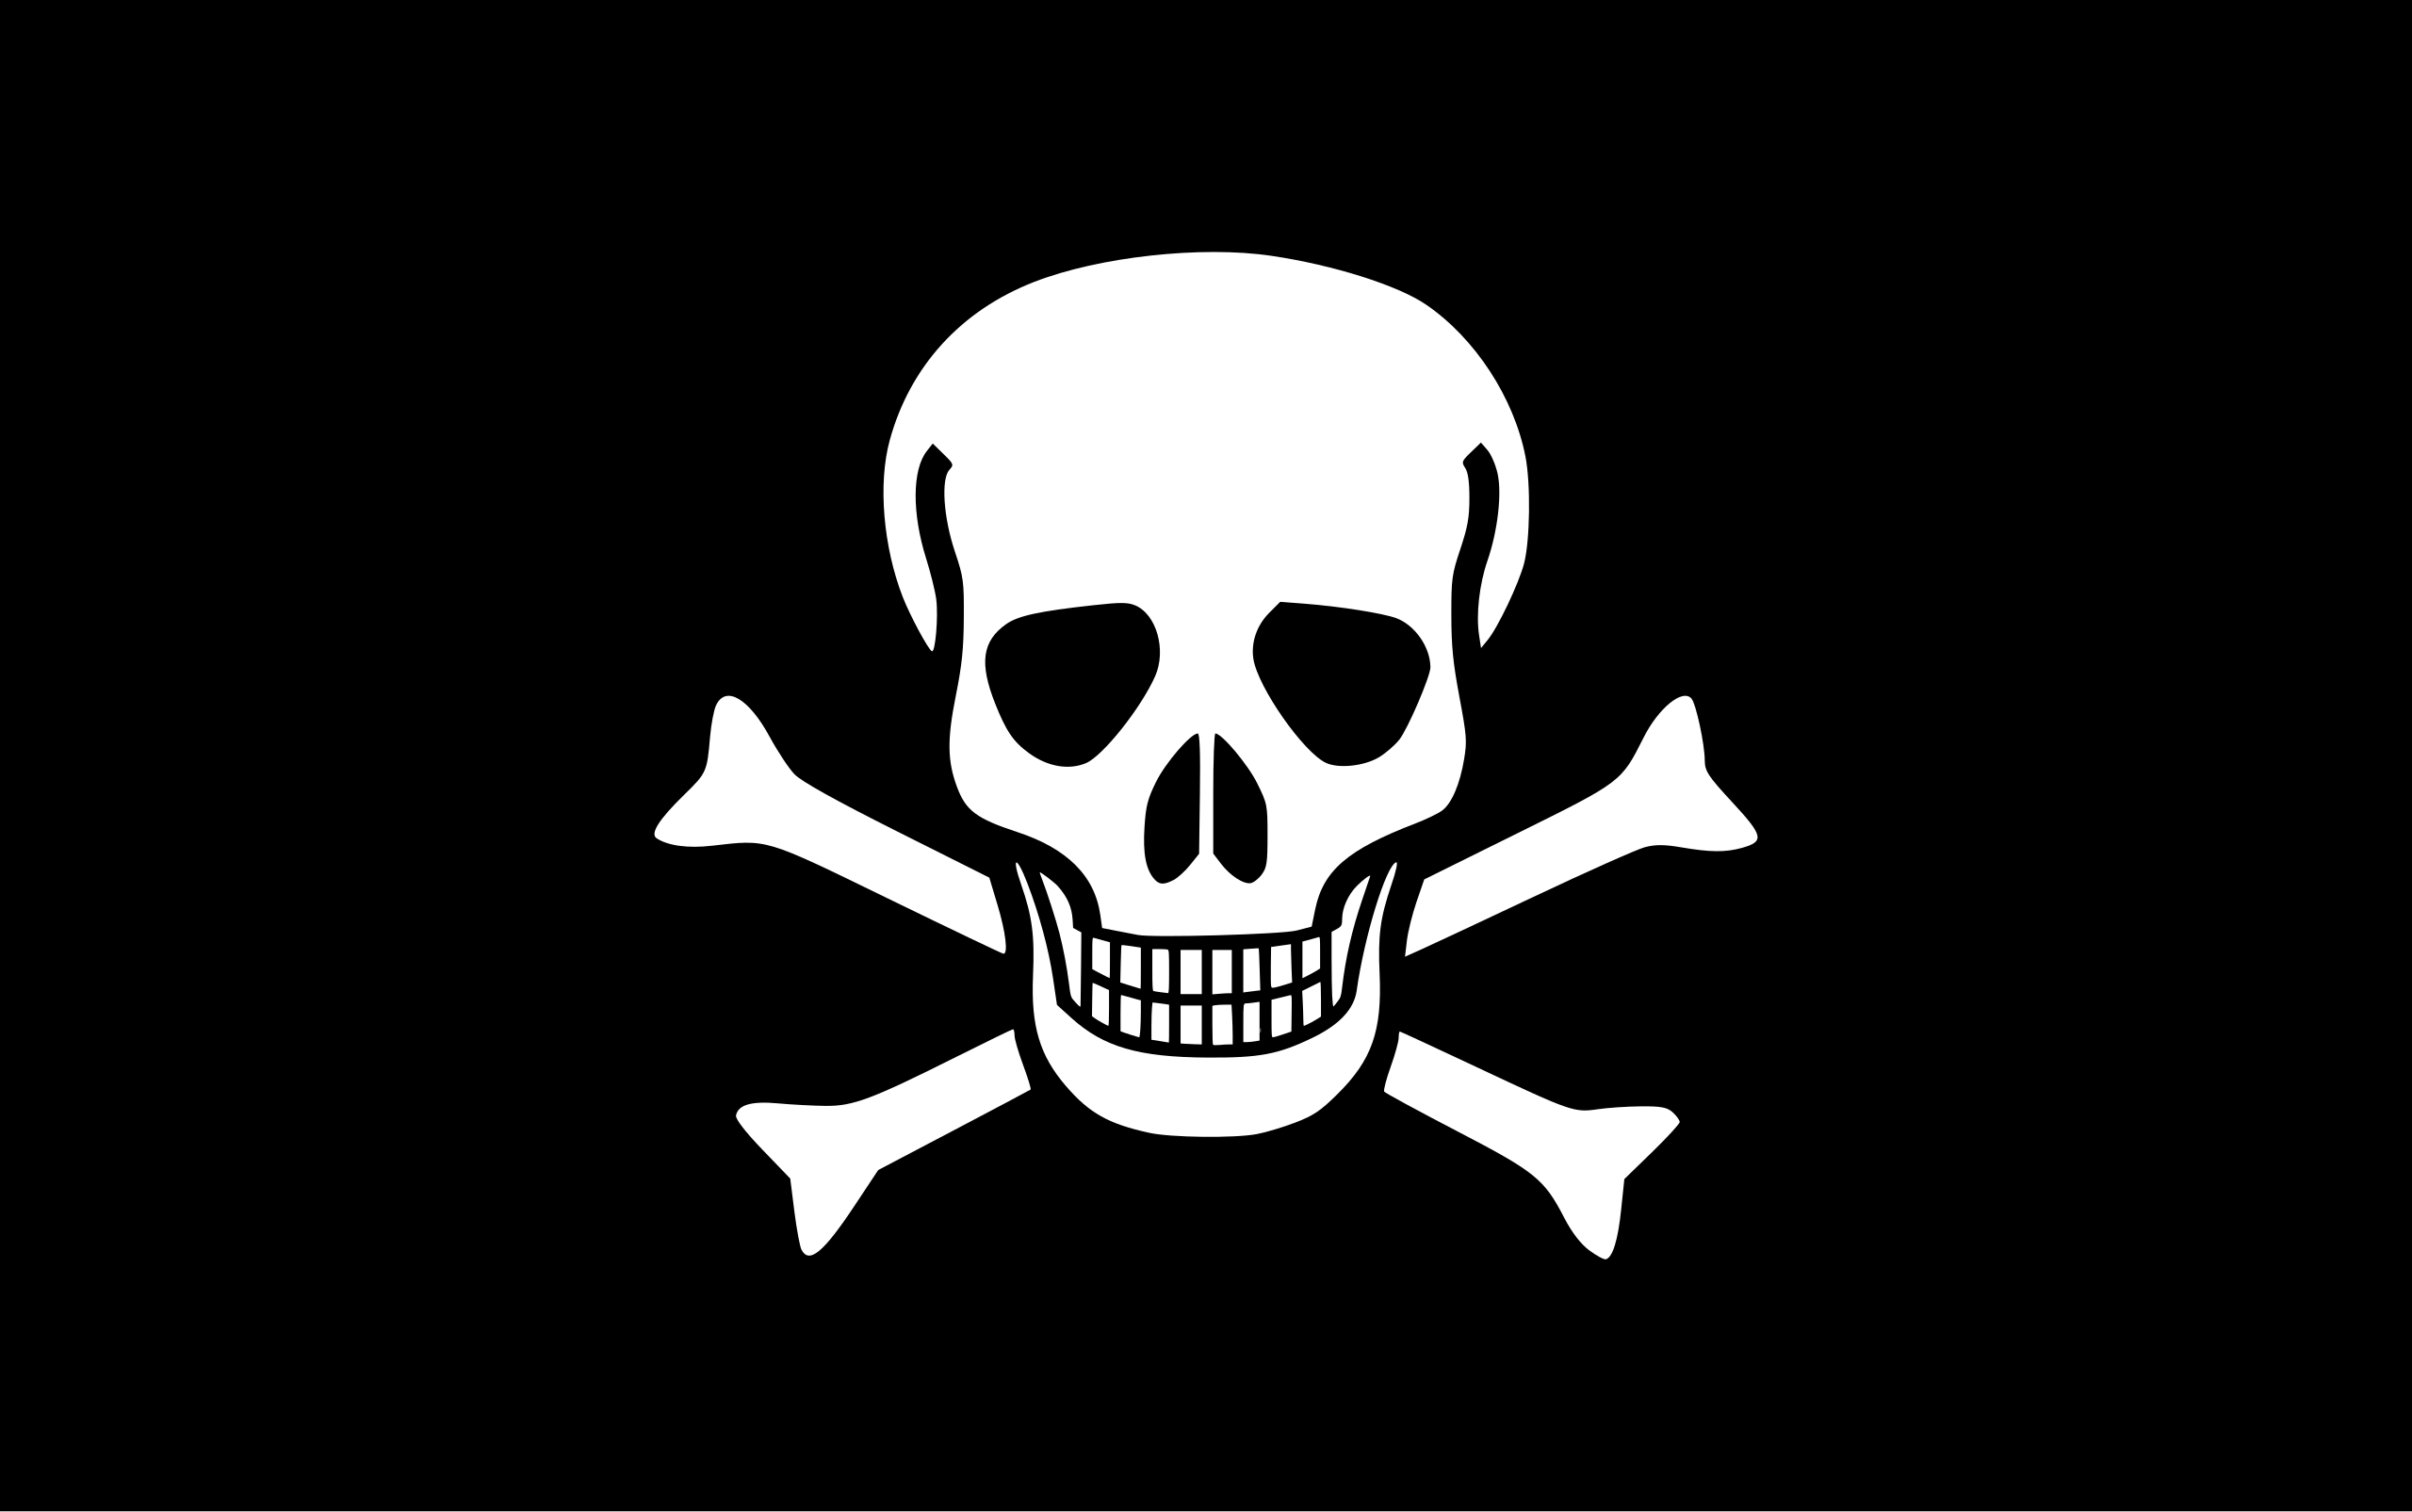 File:Pirate Flag.svg - Wikipedia